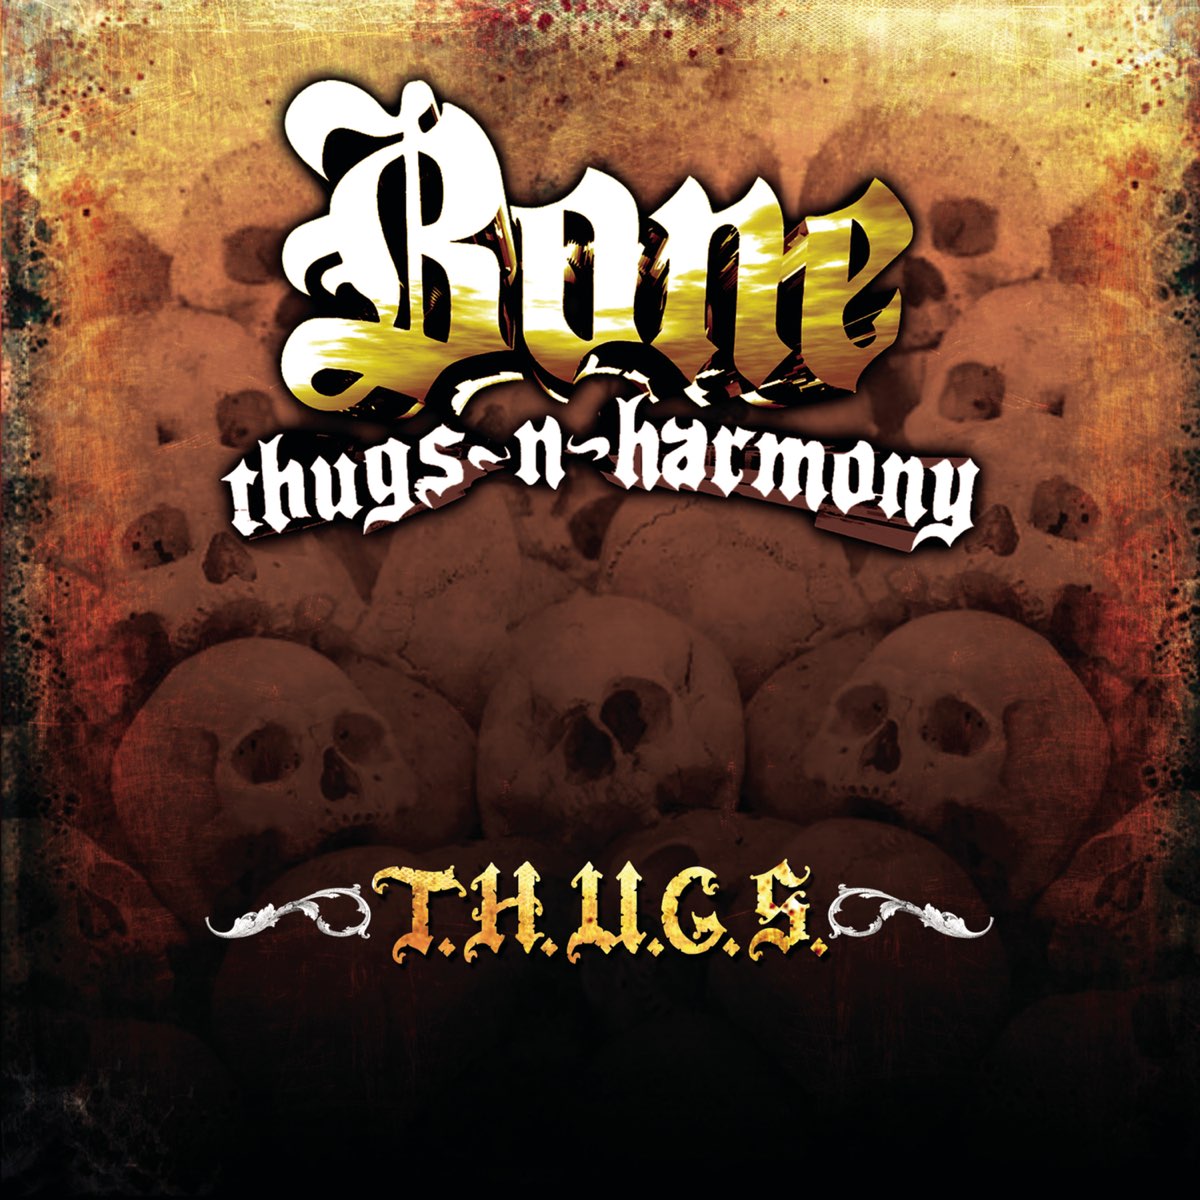 Bone Thugs-n-Harmony. Thugs. Bone Thugs -n - Harmony Rapper. Bone Thugs & Harmony strength and Loyalty.